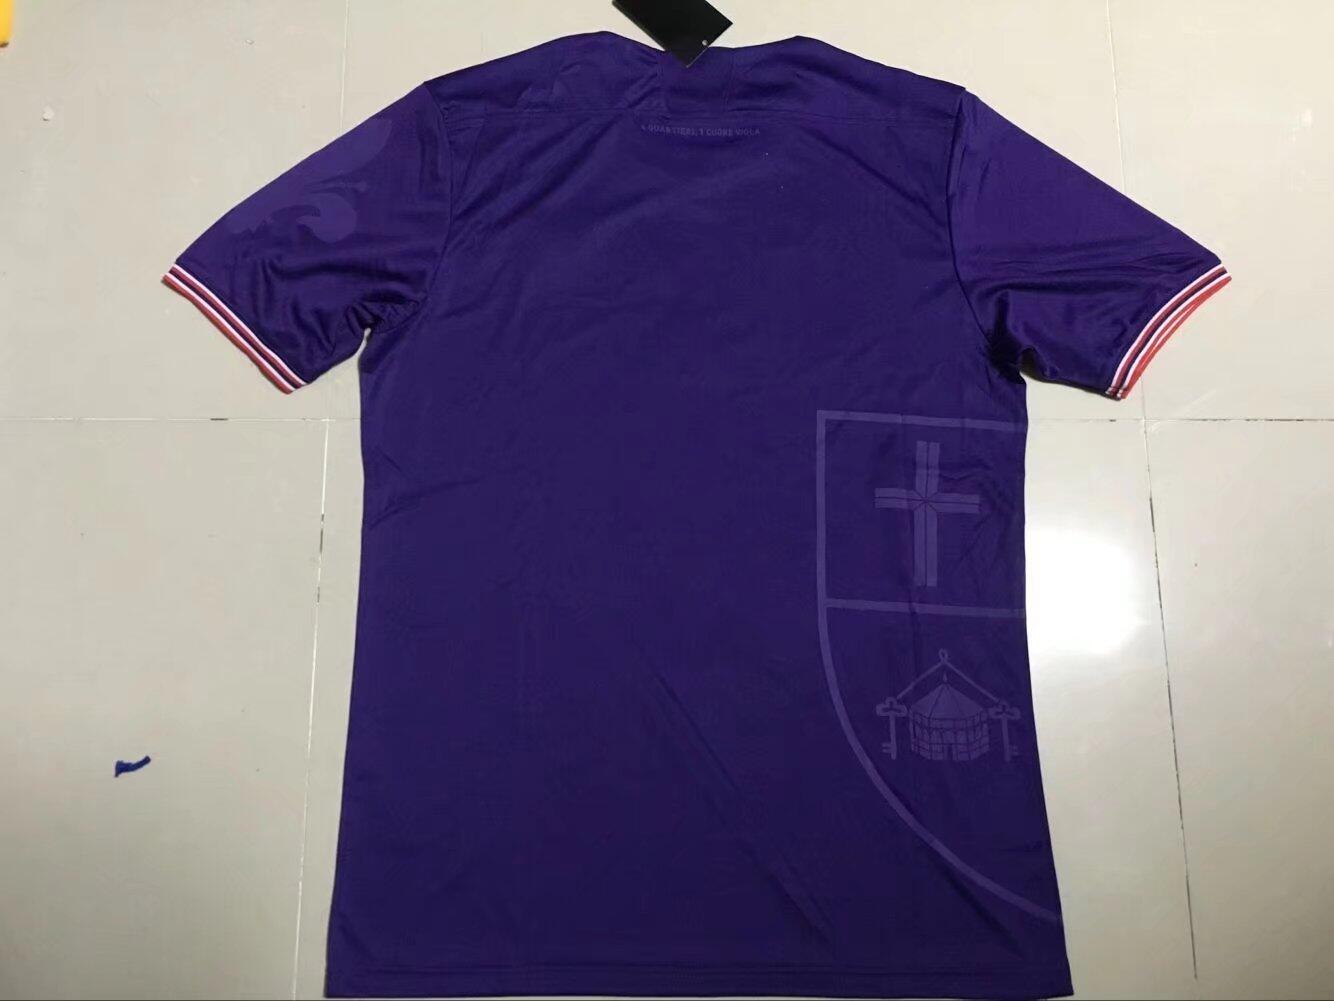 Fiorentina Home 2017/18 Soccer Jersey Shirt - Click Image to Close